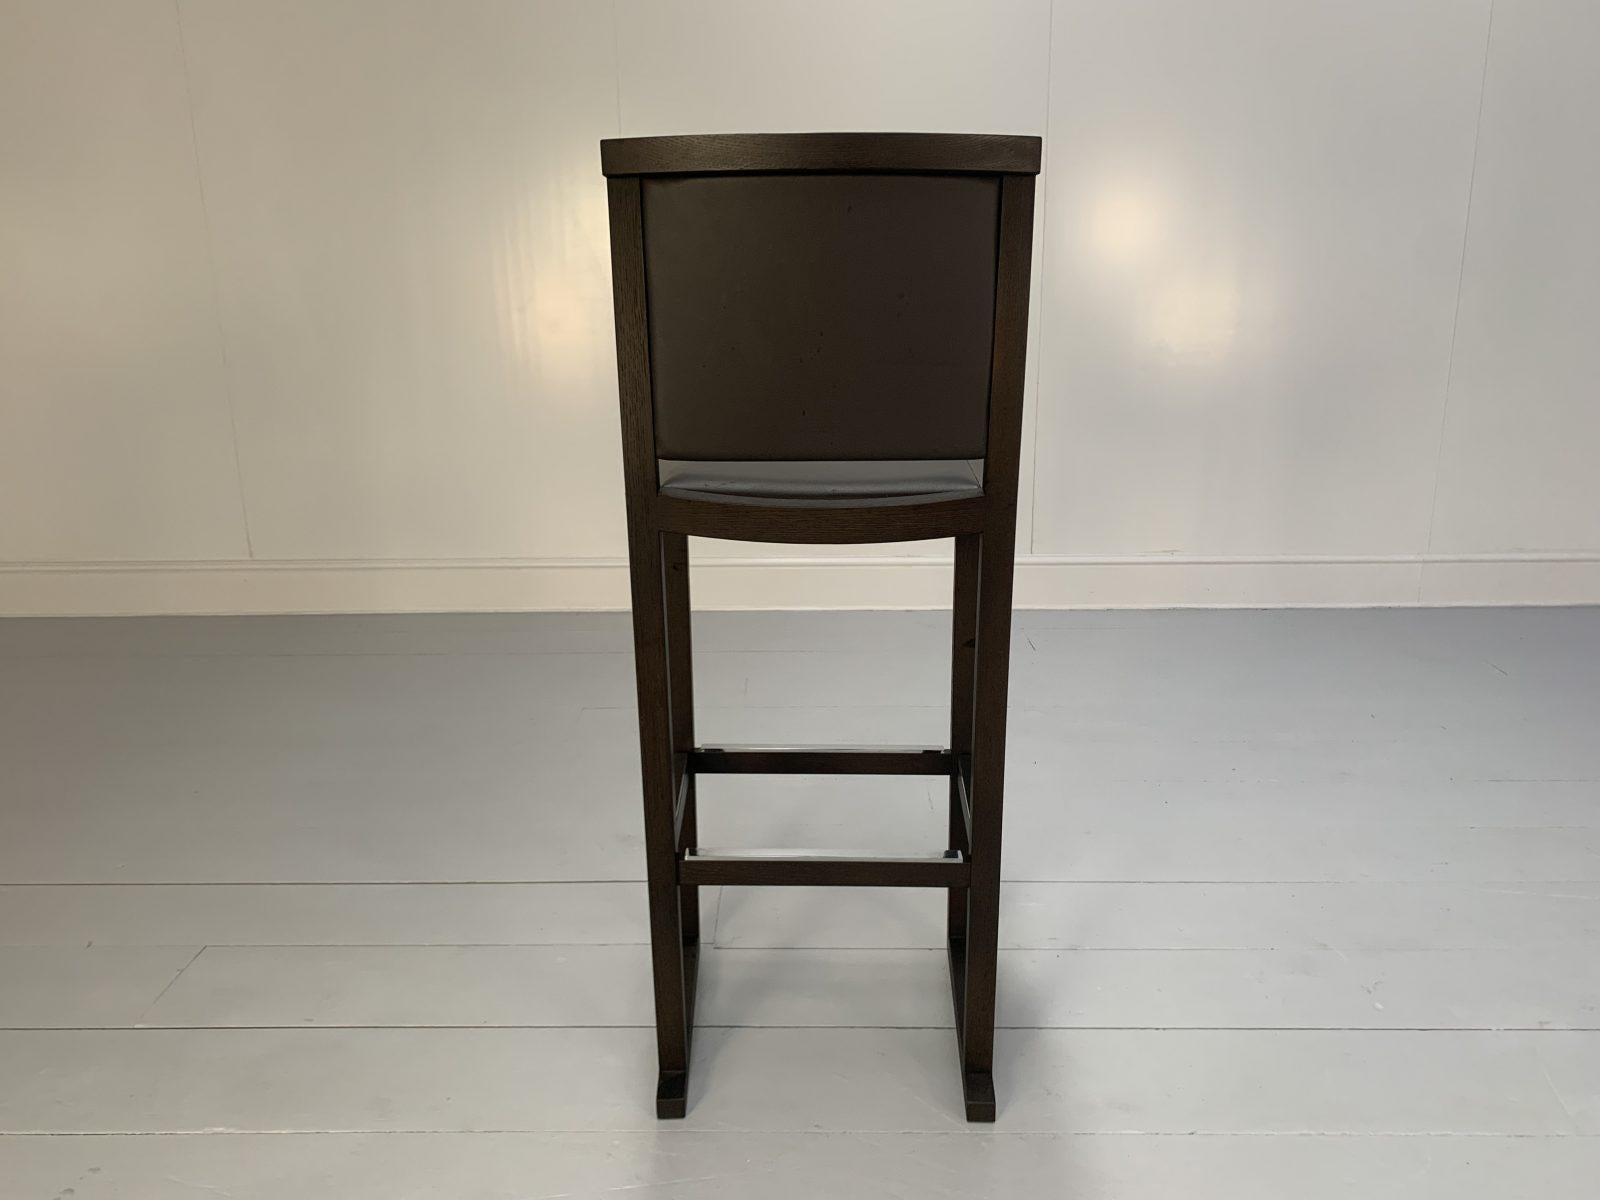 Pair of B&B Italia “Musa SM46G” Tall Bar Stool Chairs – In Dark Grey “Kasia” Lea For Sale 7